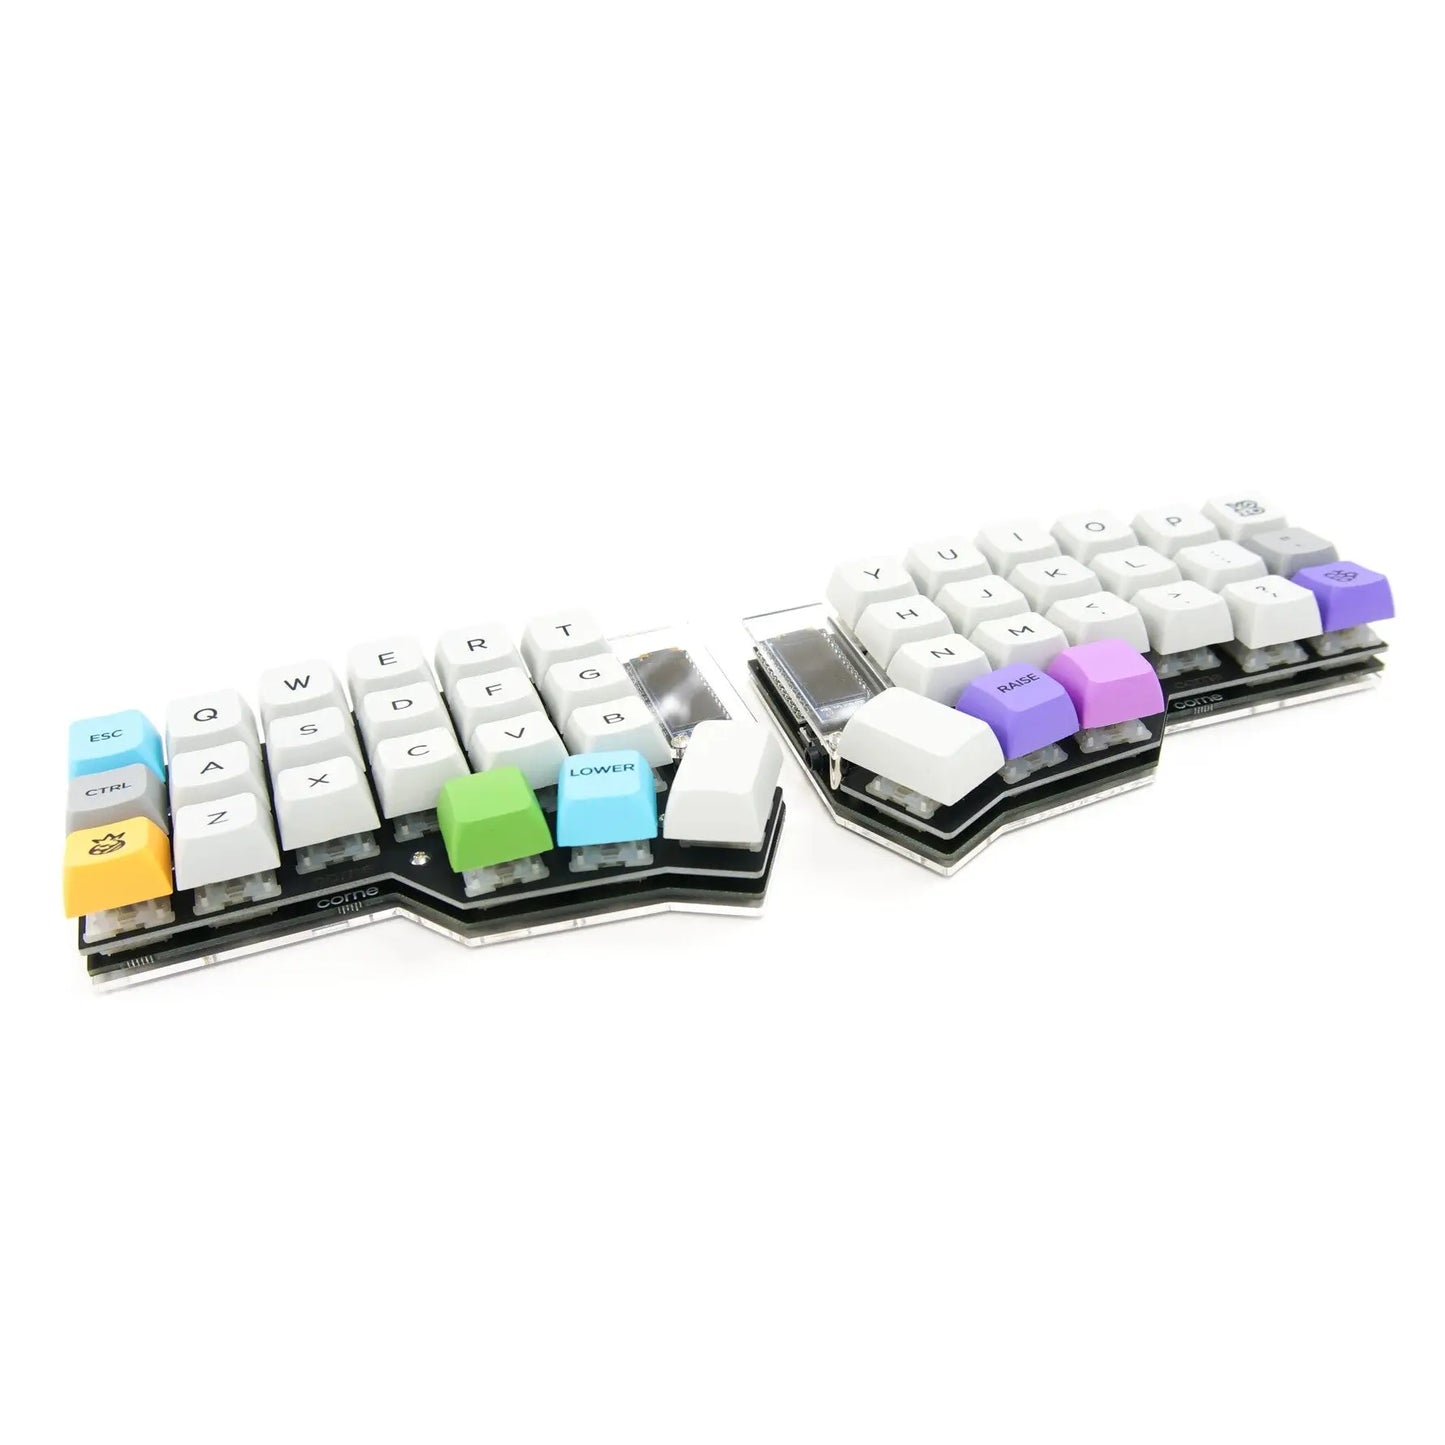 Corne Cherry v3 RGB Keyboard Kit KEEBD